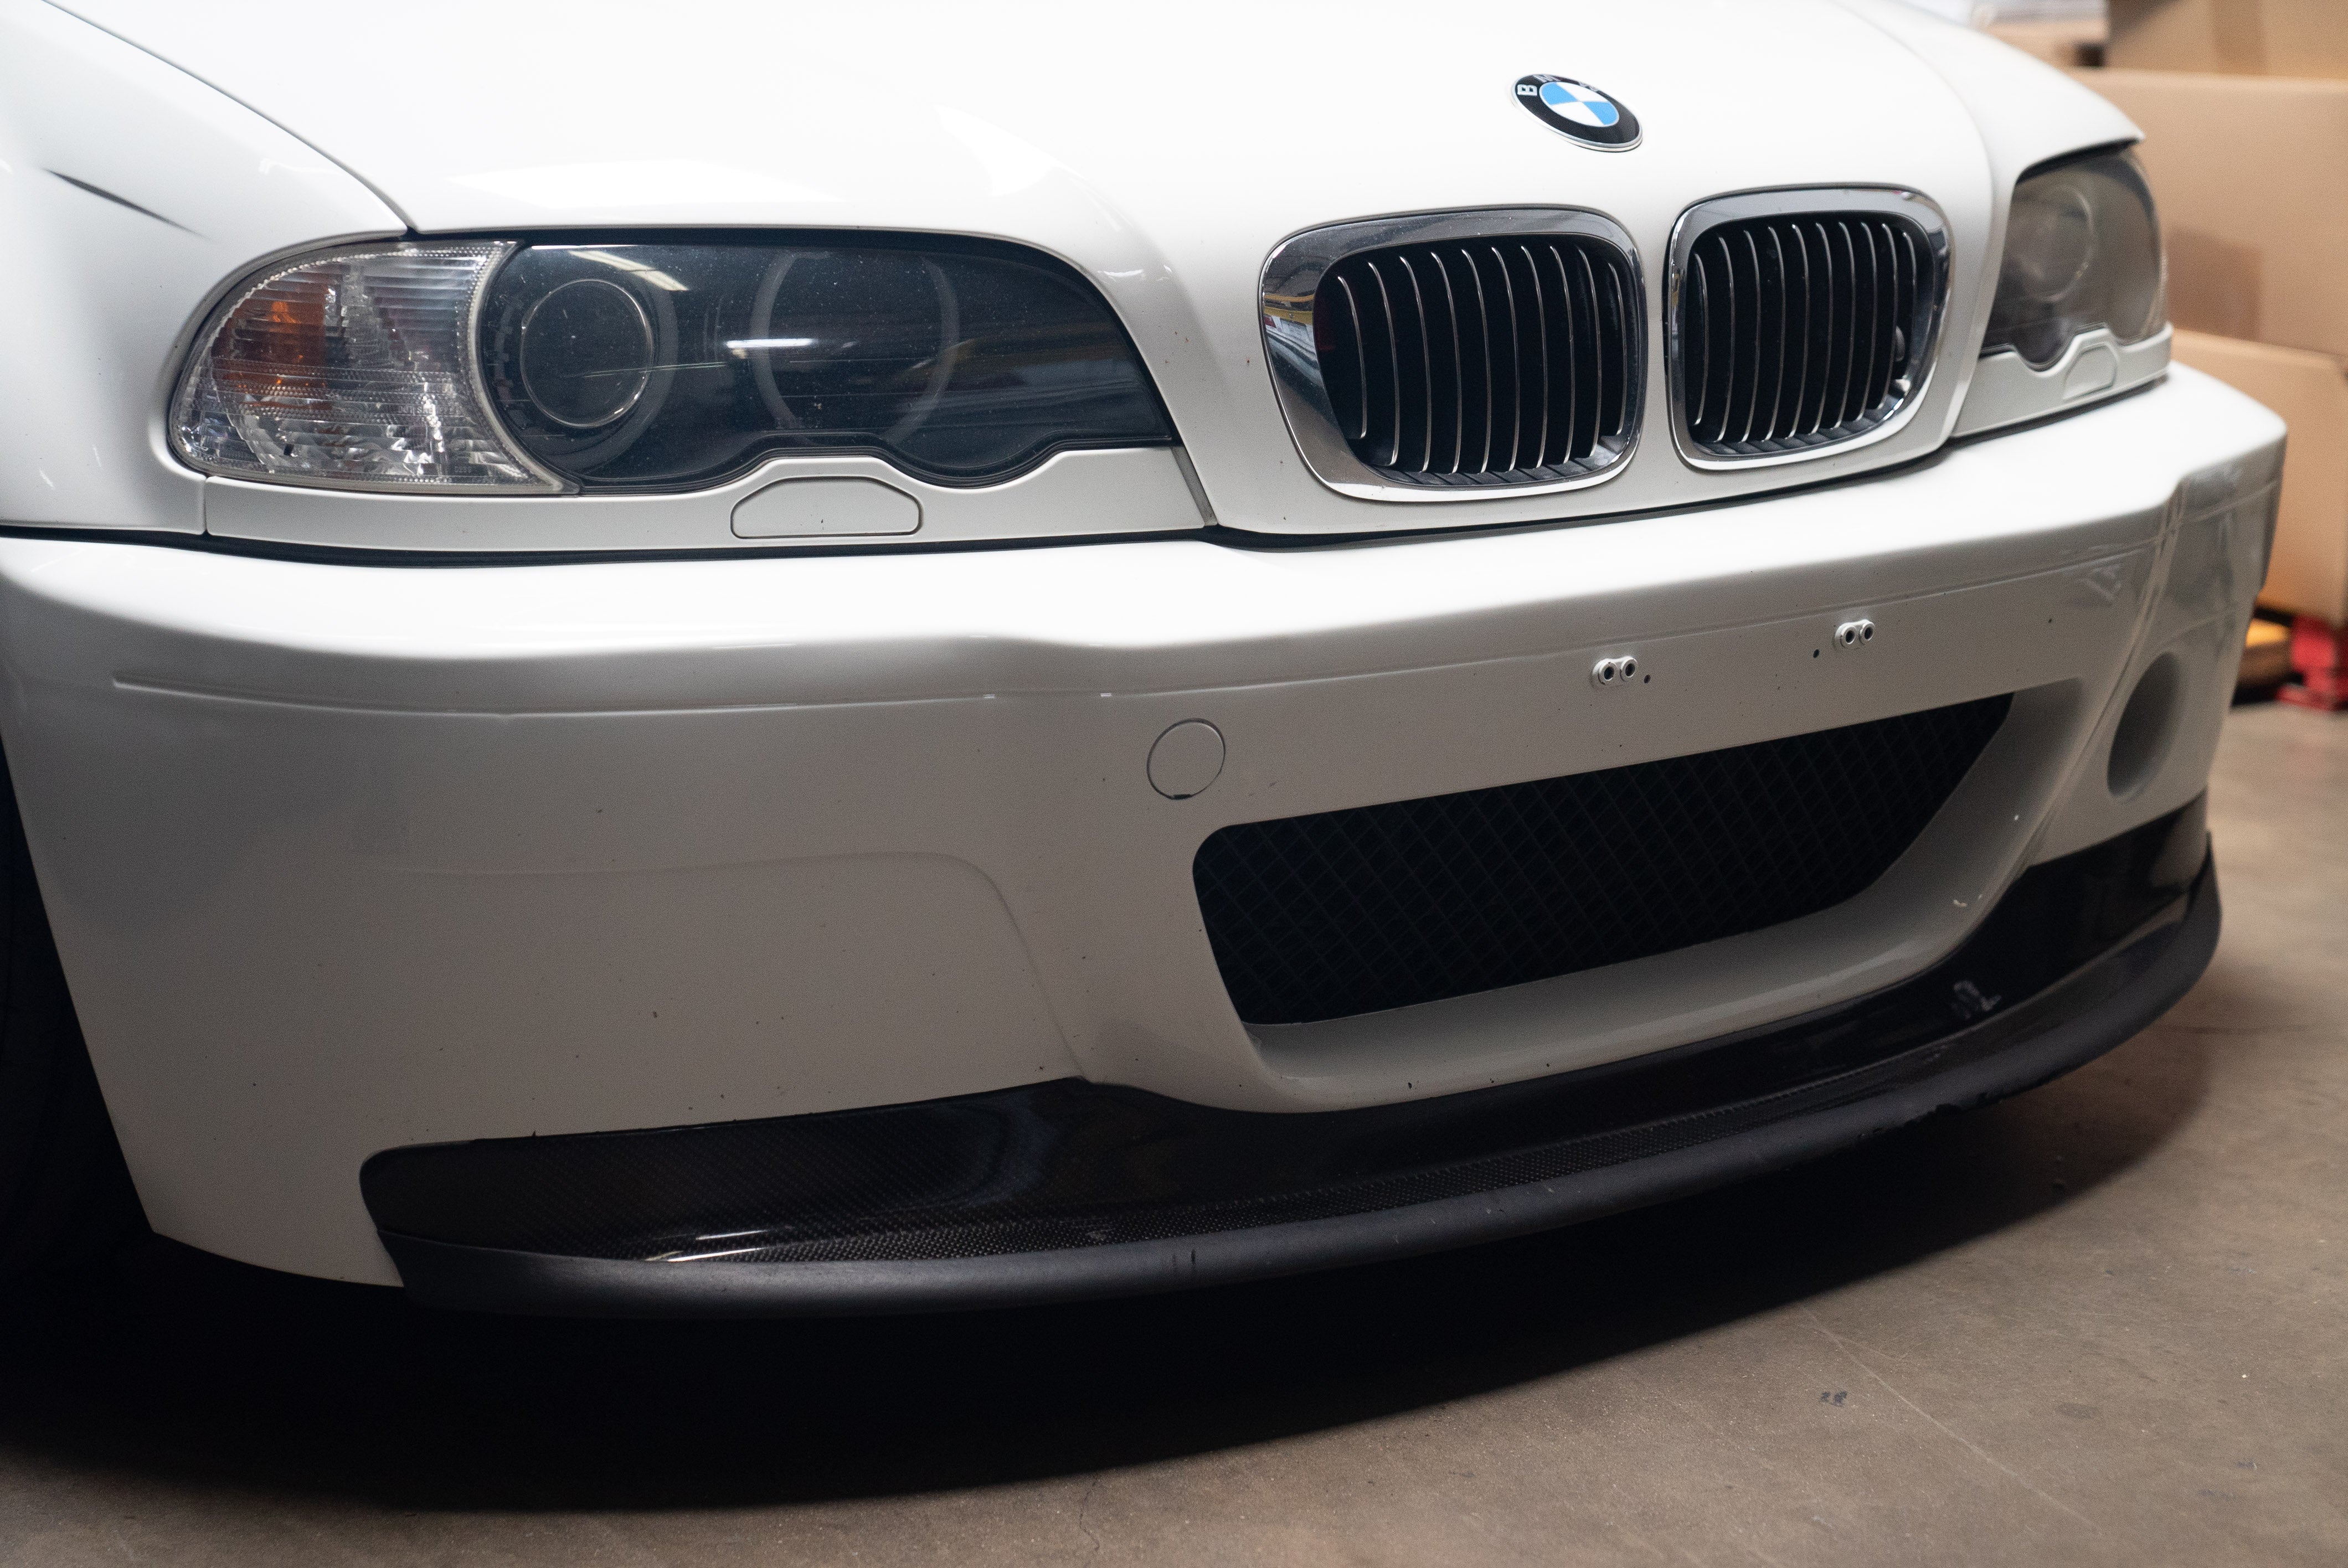  BMW E46 M3 road legal track car (engine rebuilt)